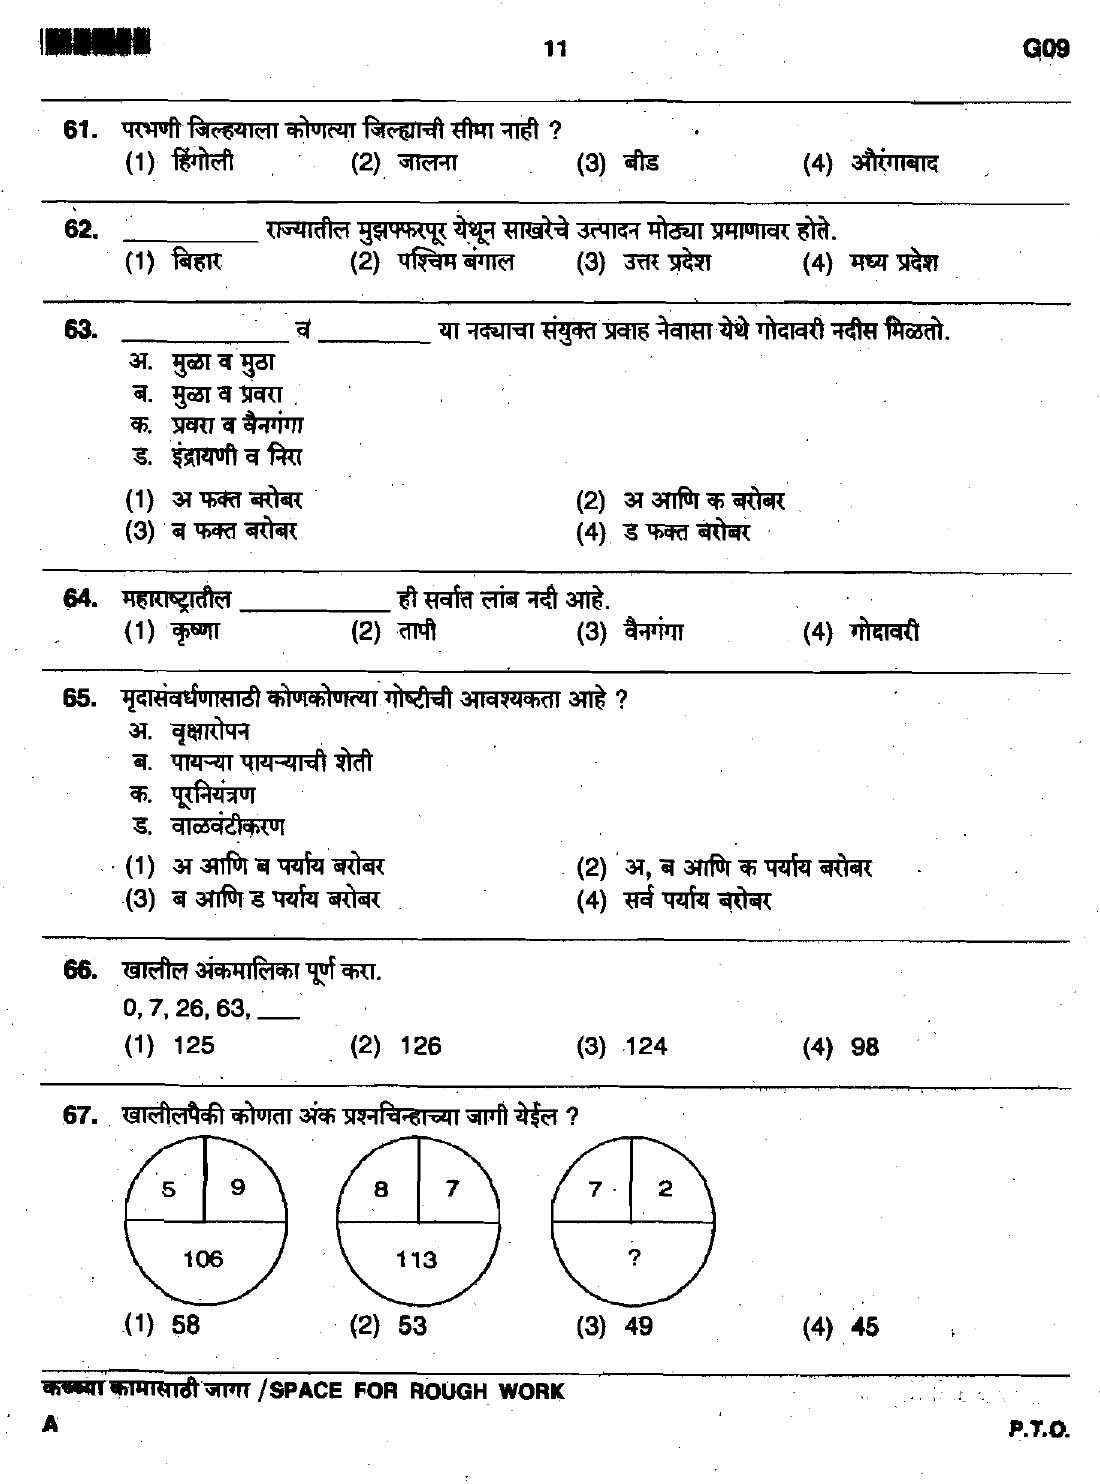 Maharashtra PSC Clerk Typist Preliminary Exam Question Paper 2017 10